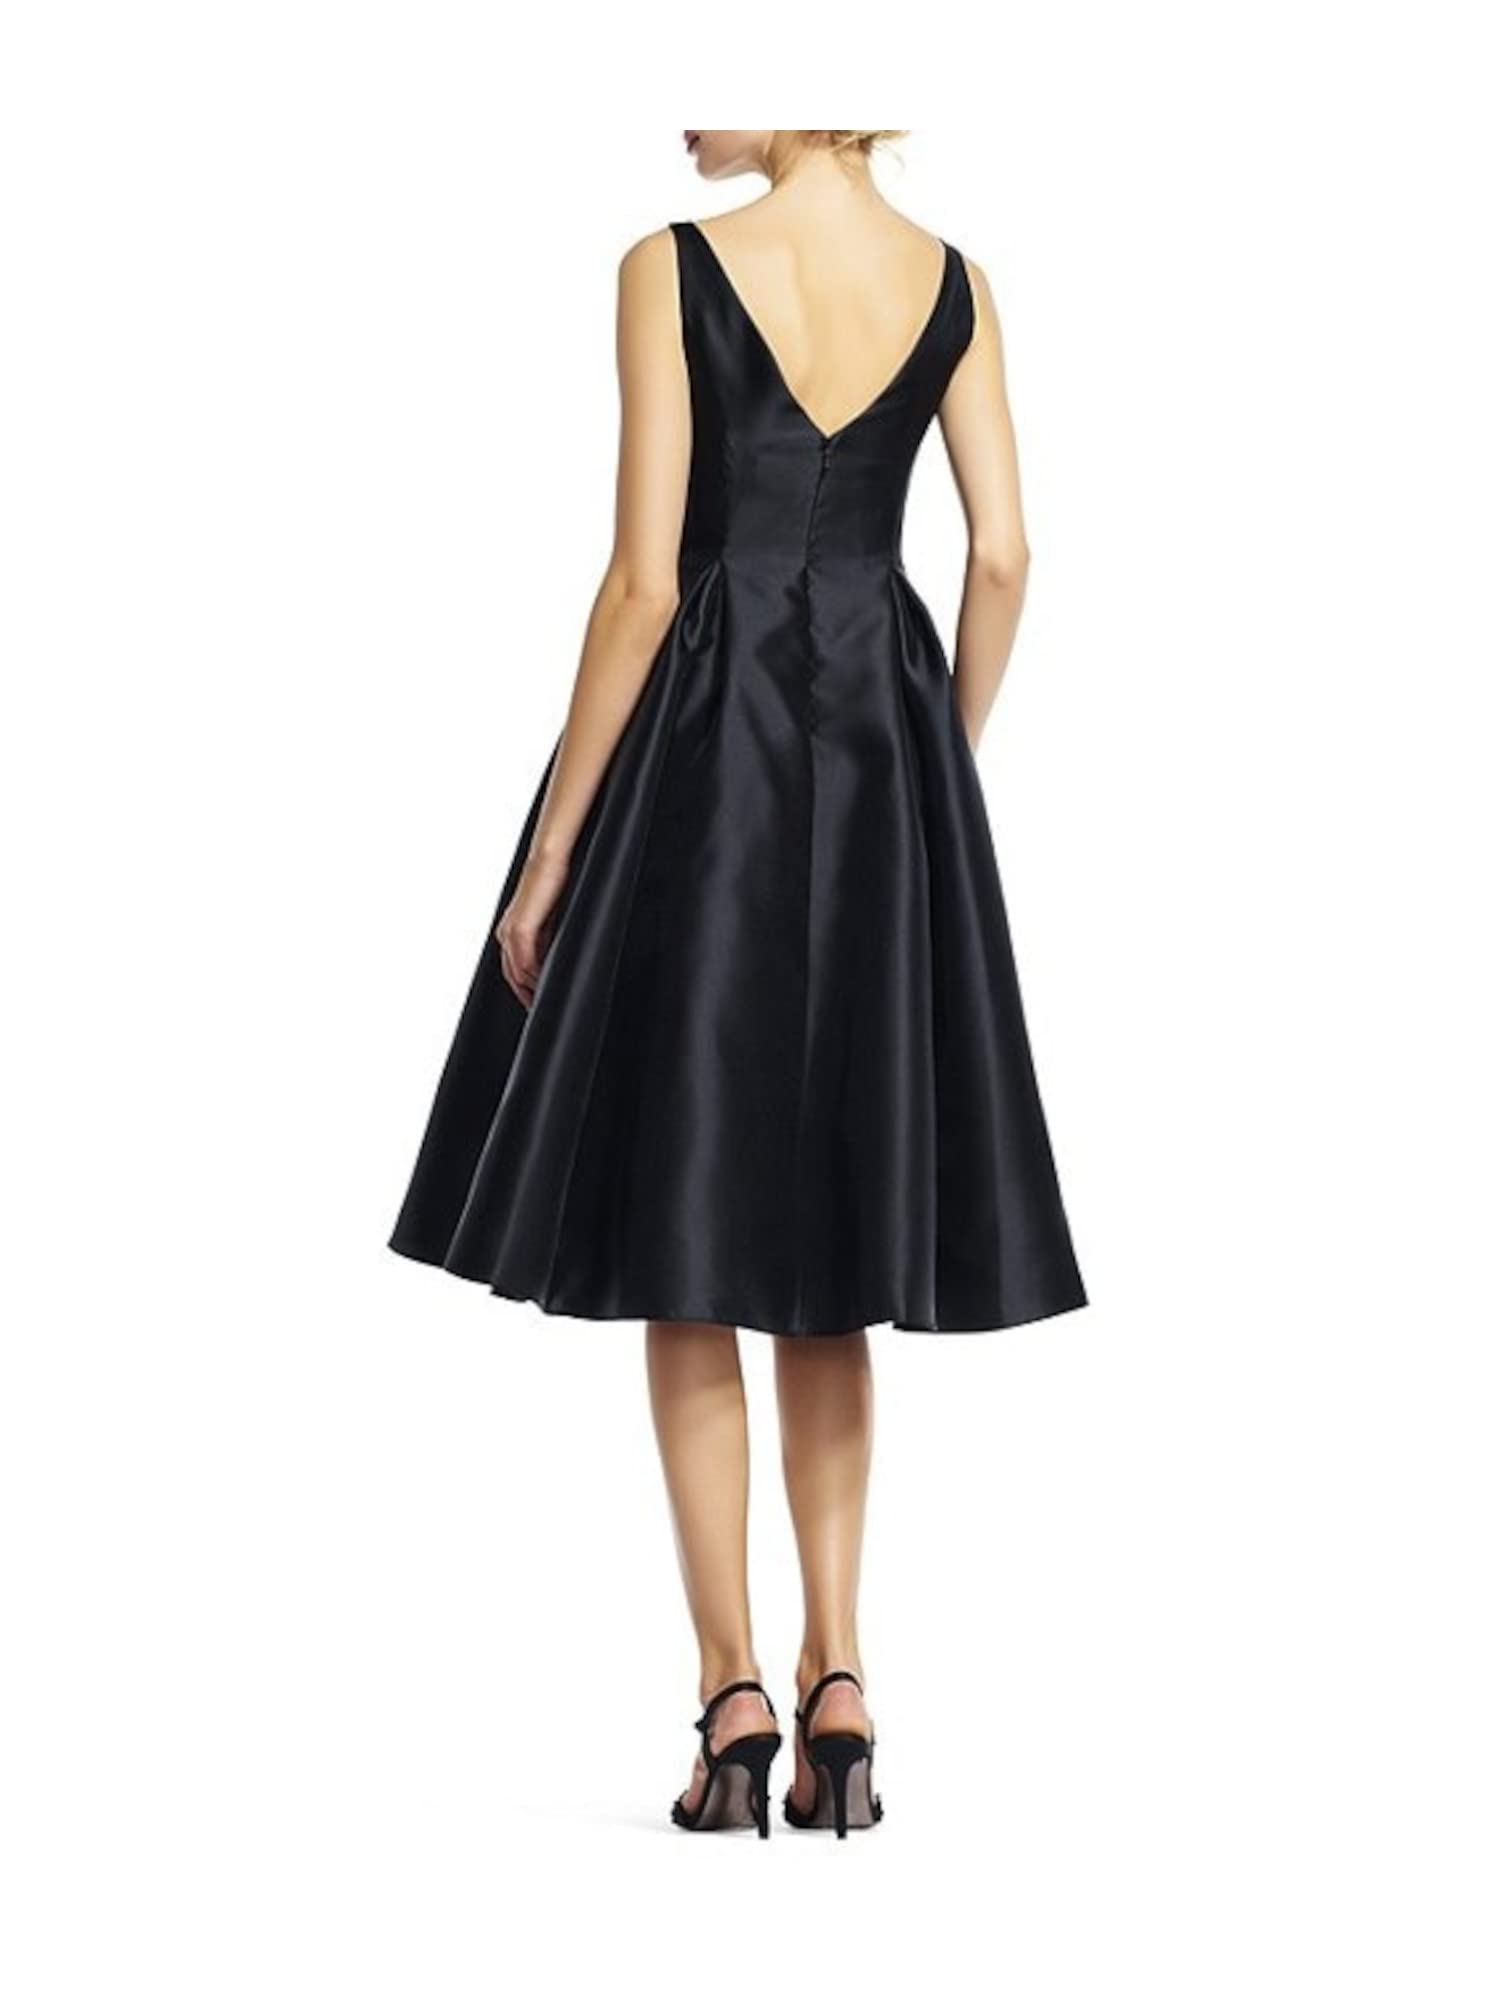 Adrianna Papell Women's Sleeveless Tea Length Dress